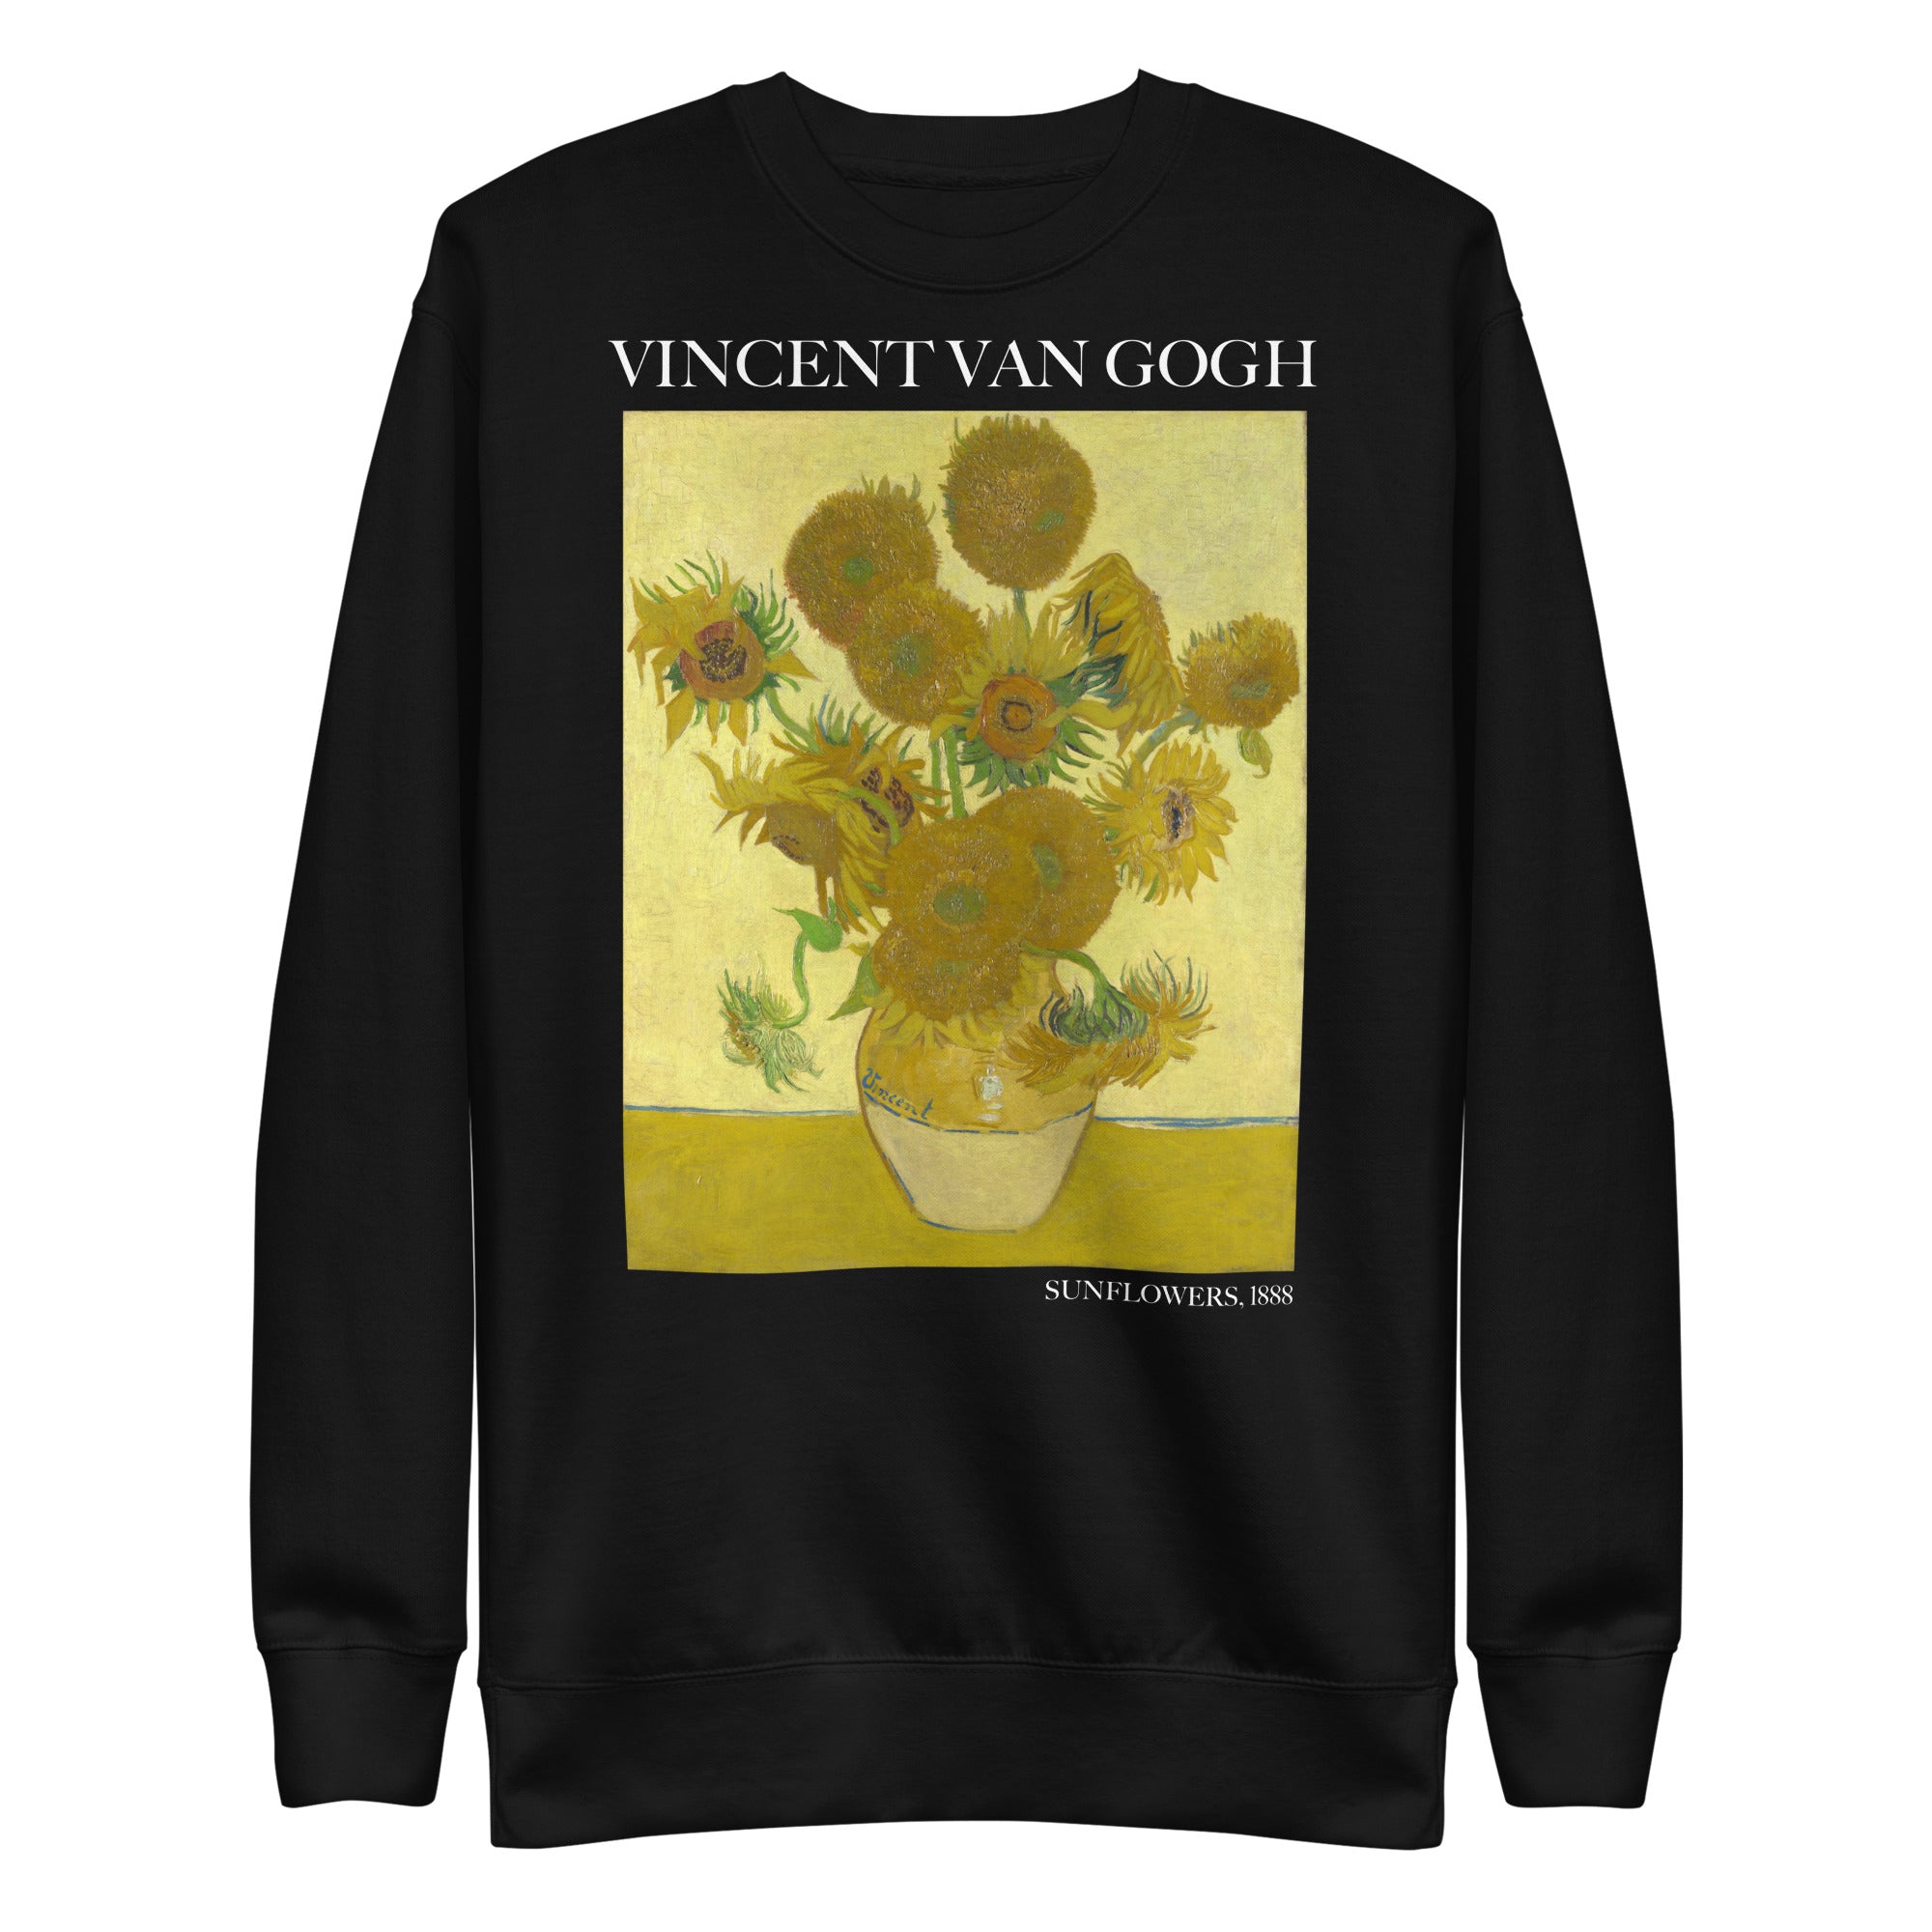 Vincent van Gogh 'Sunflowers' Famous Painting Sweatshirt | Unisex Premium Sweatshirt